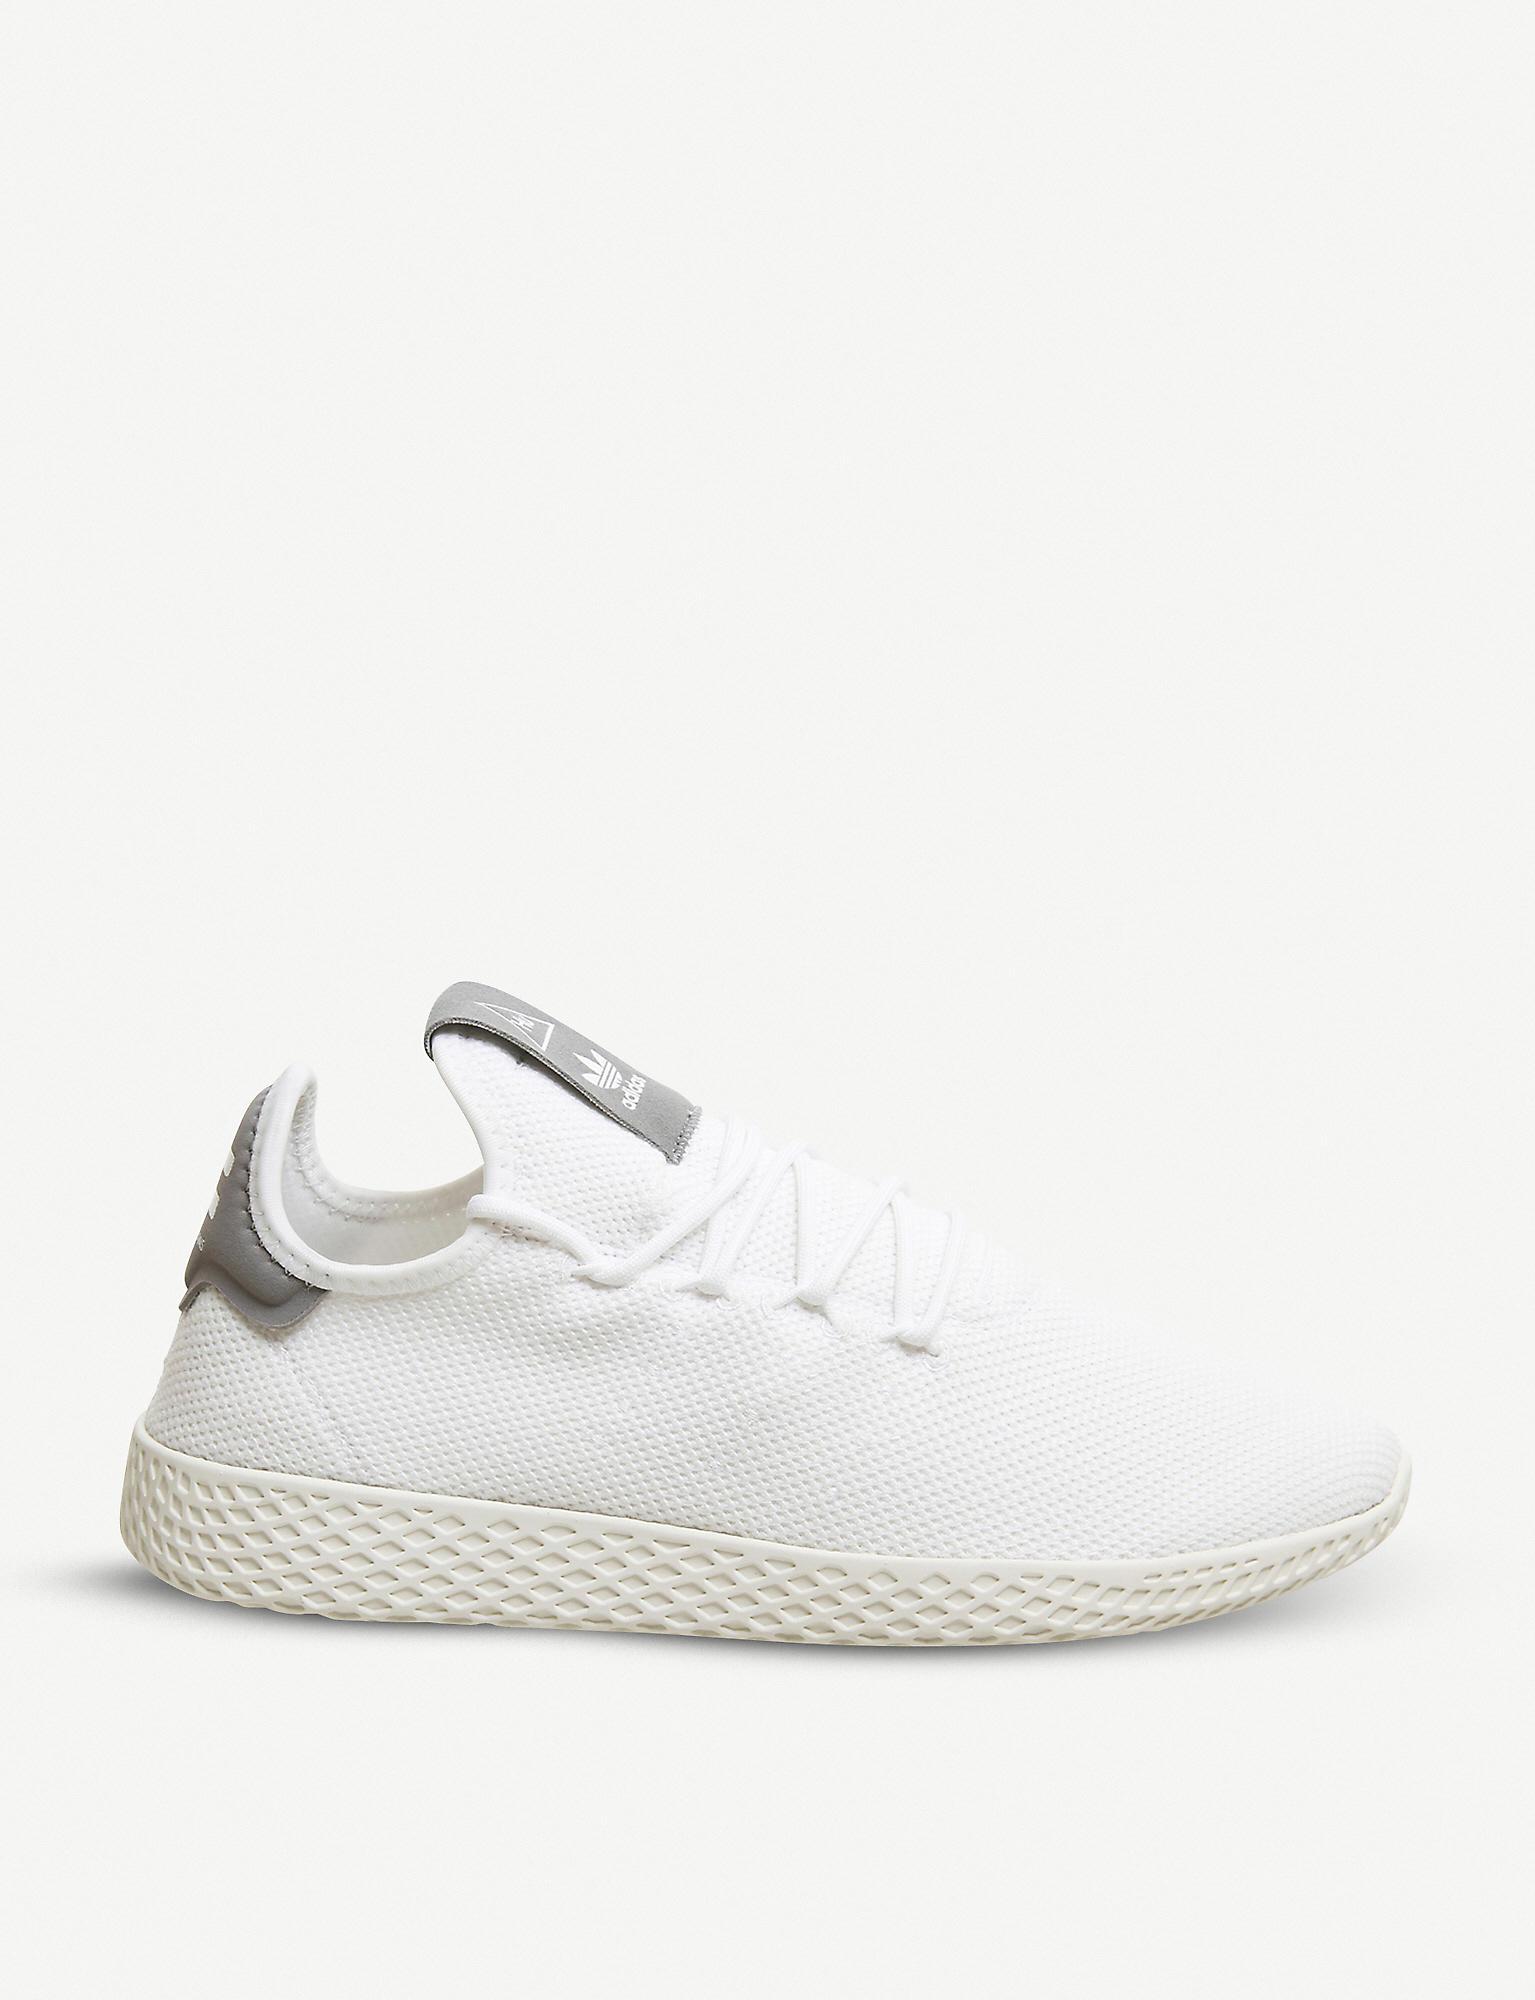 adidas Pharrell Williams Tennis Hu Shoes in White | Lyst